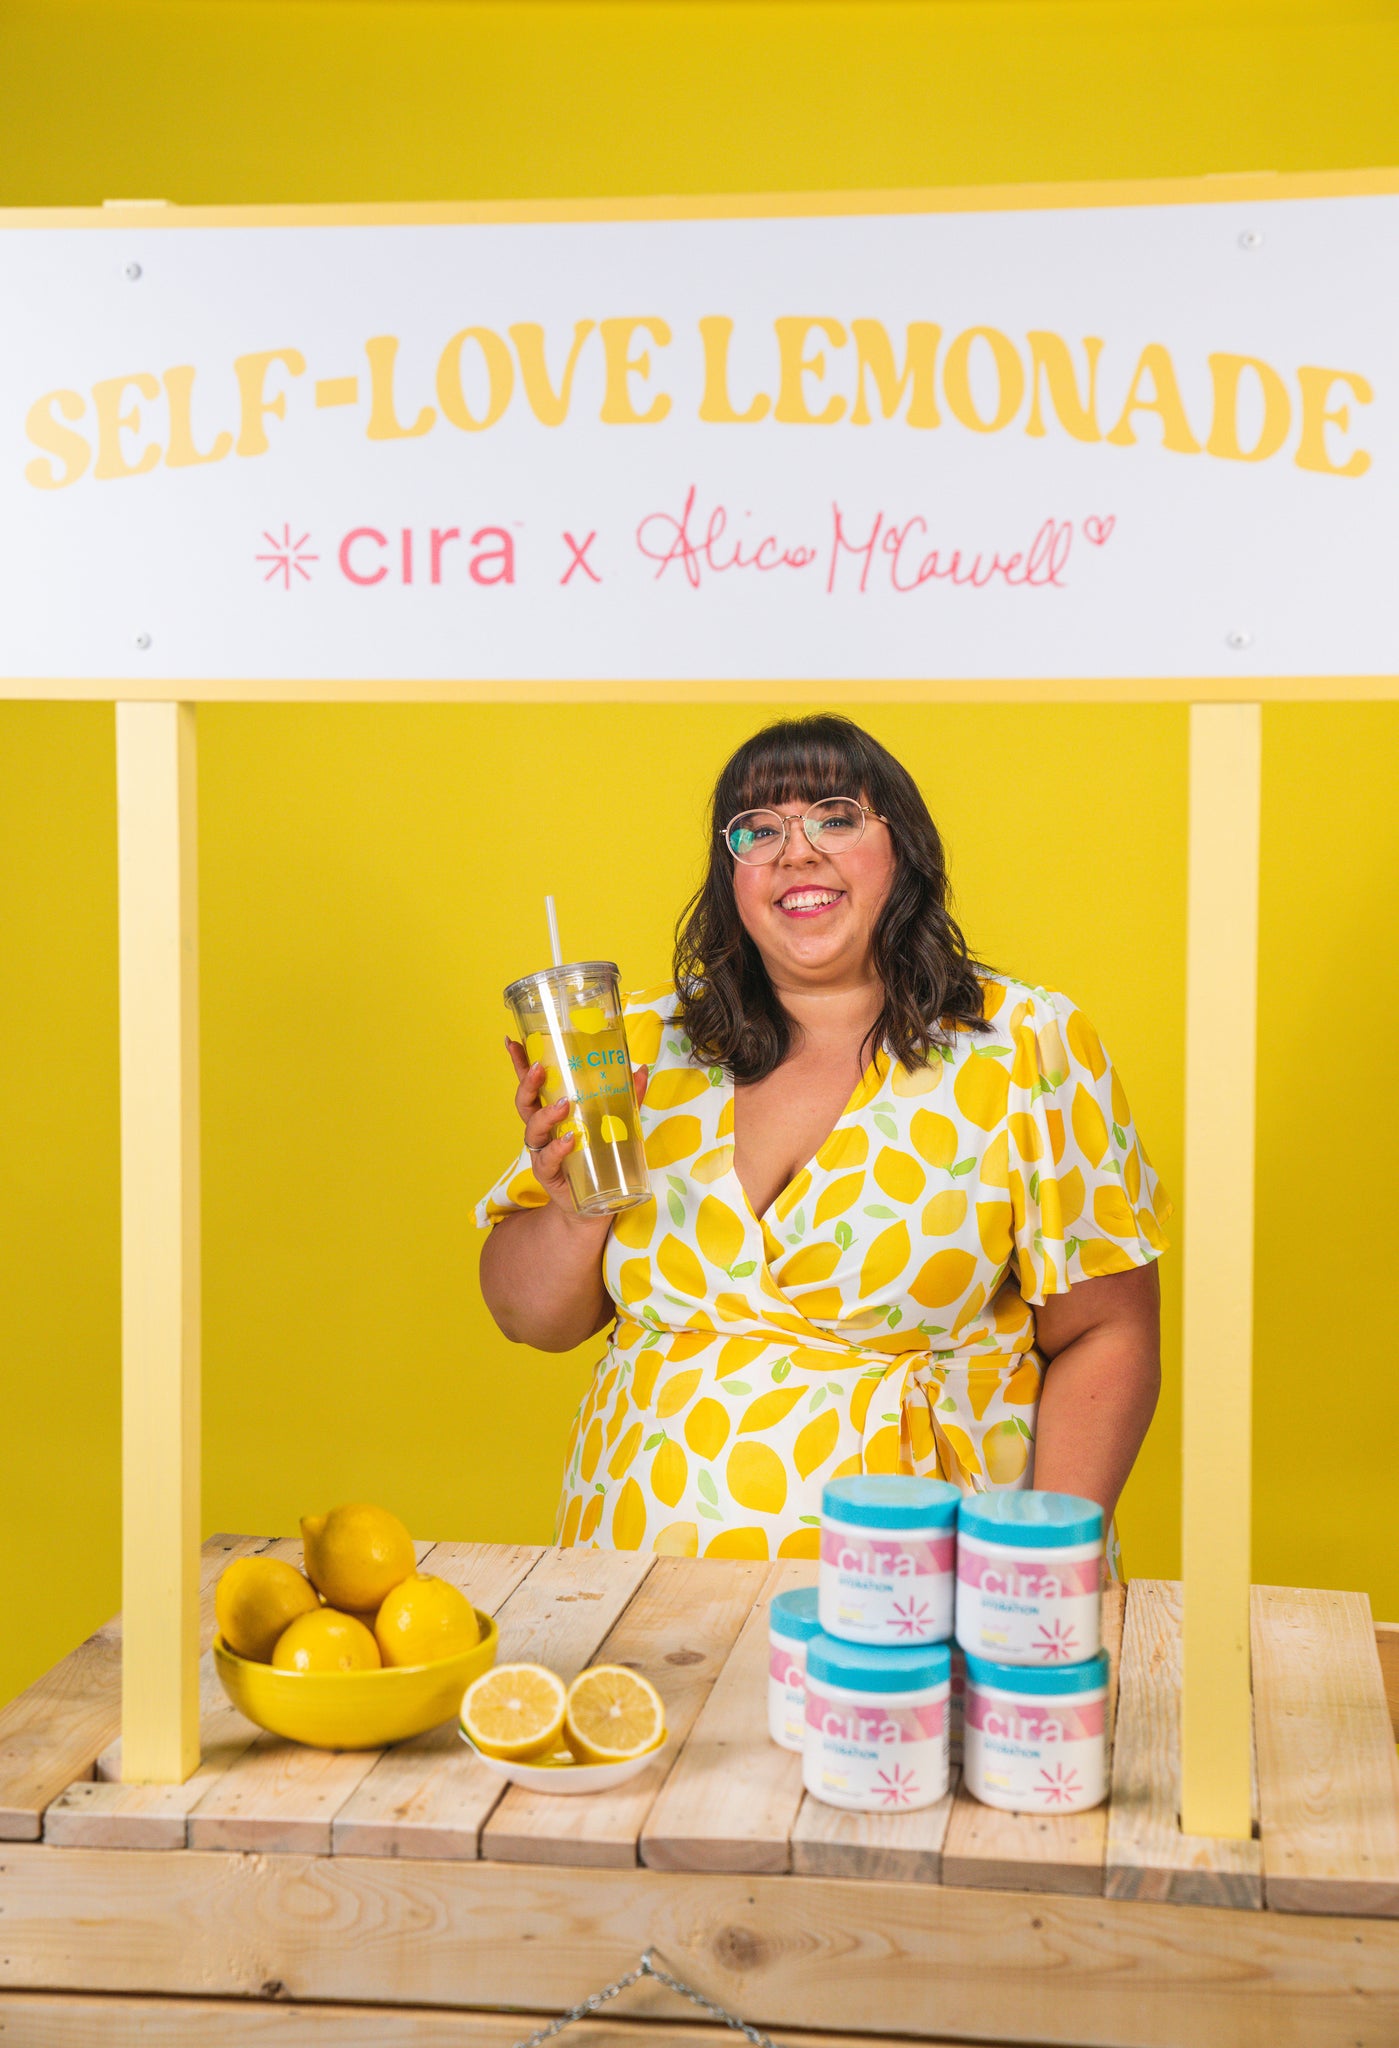 Behind The Scenes Of The Self Love Lemonade Launch